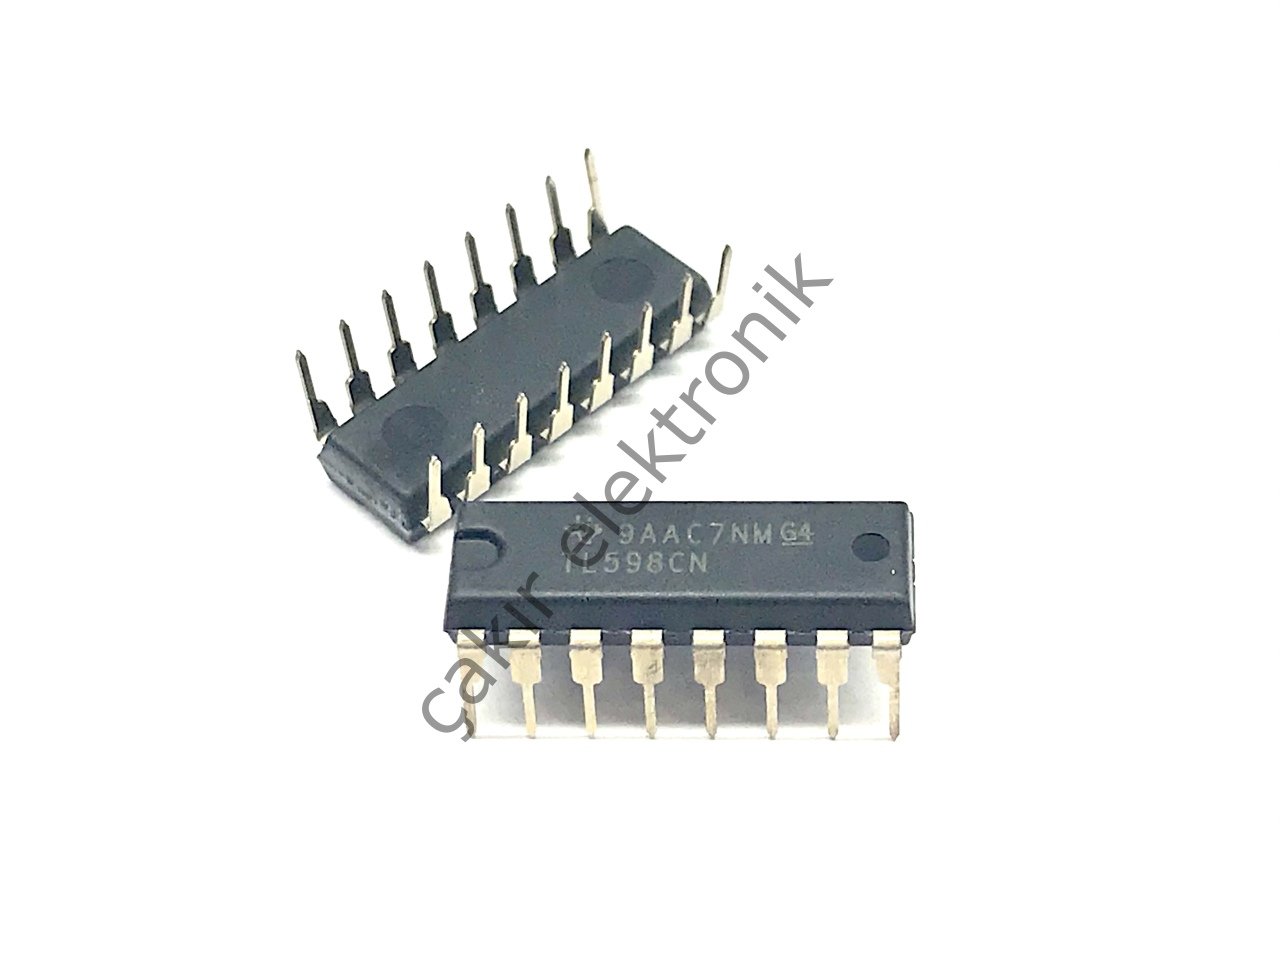 TL598CN - TL598 - Pulse-width-modulation (Pwm) control circuit